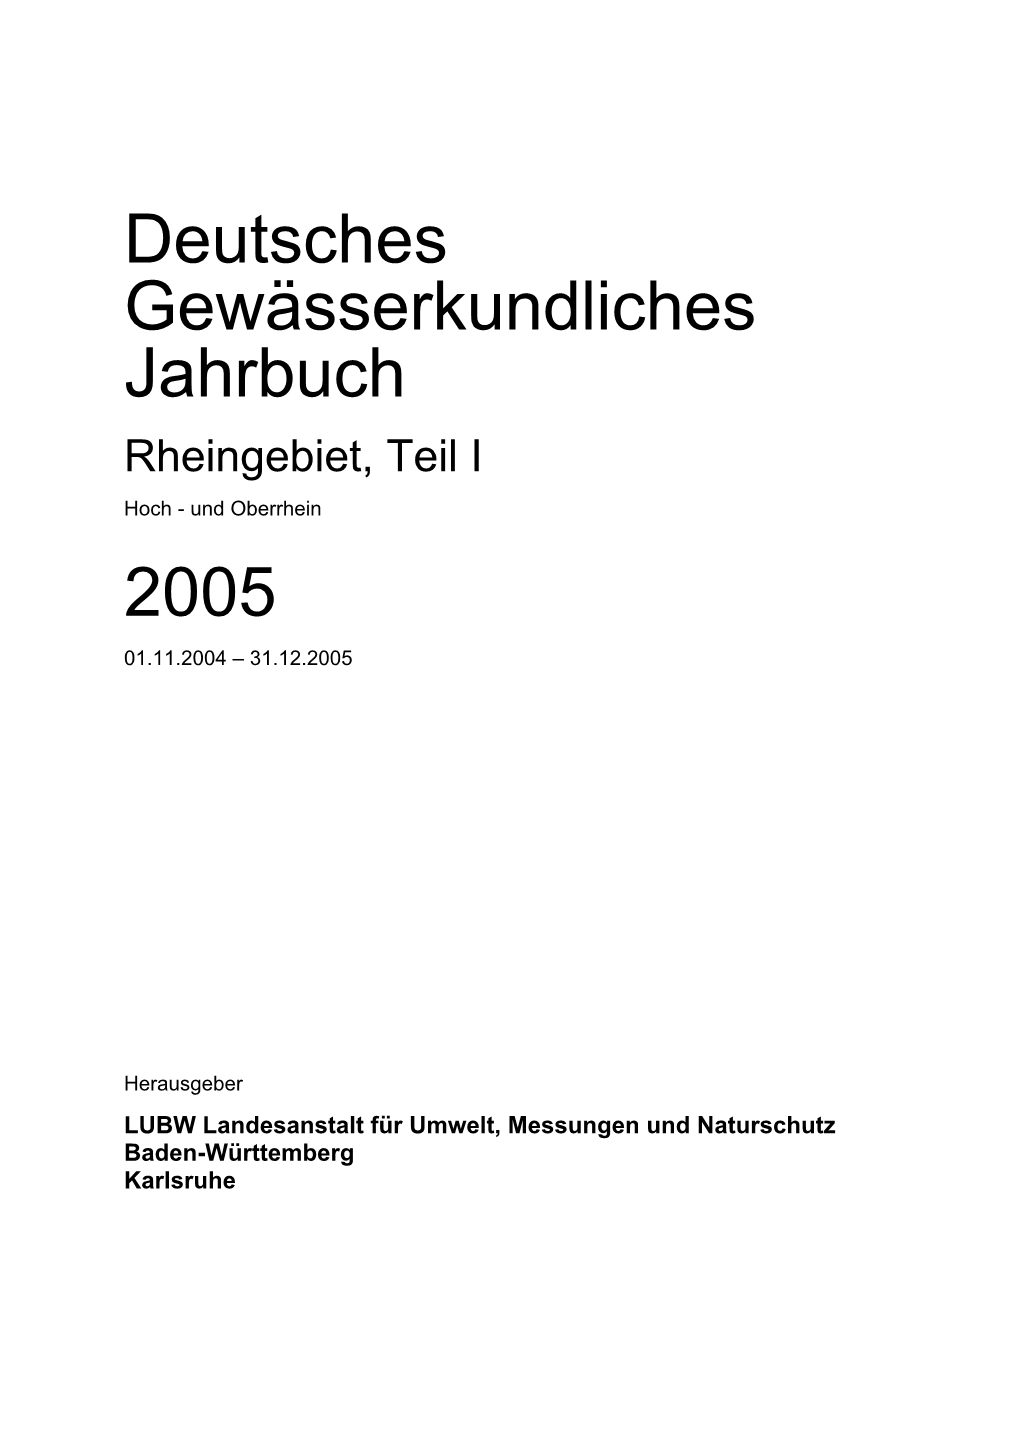 DGJ Rheingebiet Teil I 2005